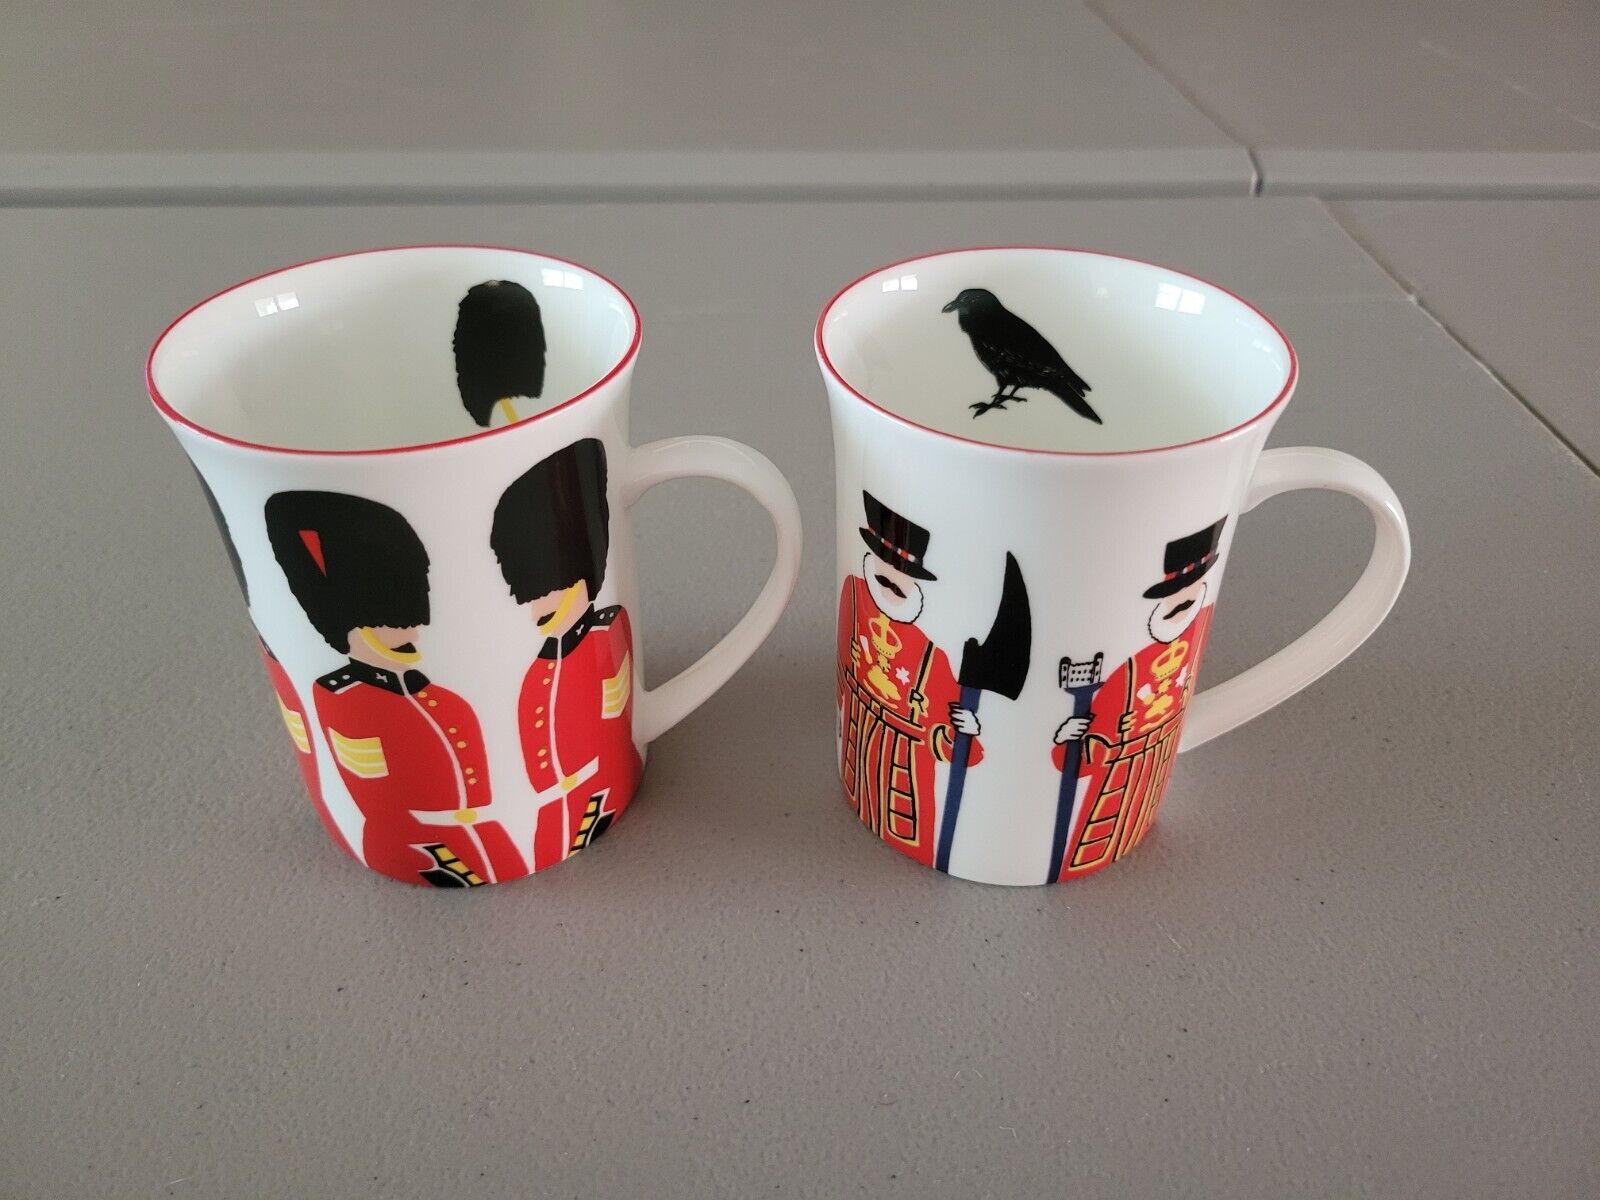 Eximious Vintage London Tea Cup Mug Royal Guard Set 0f 2